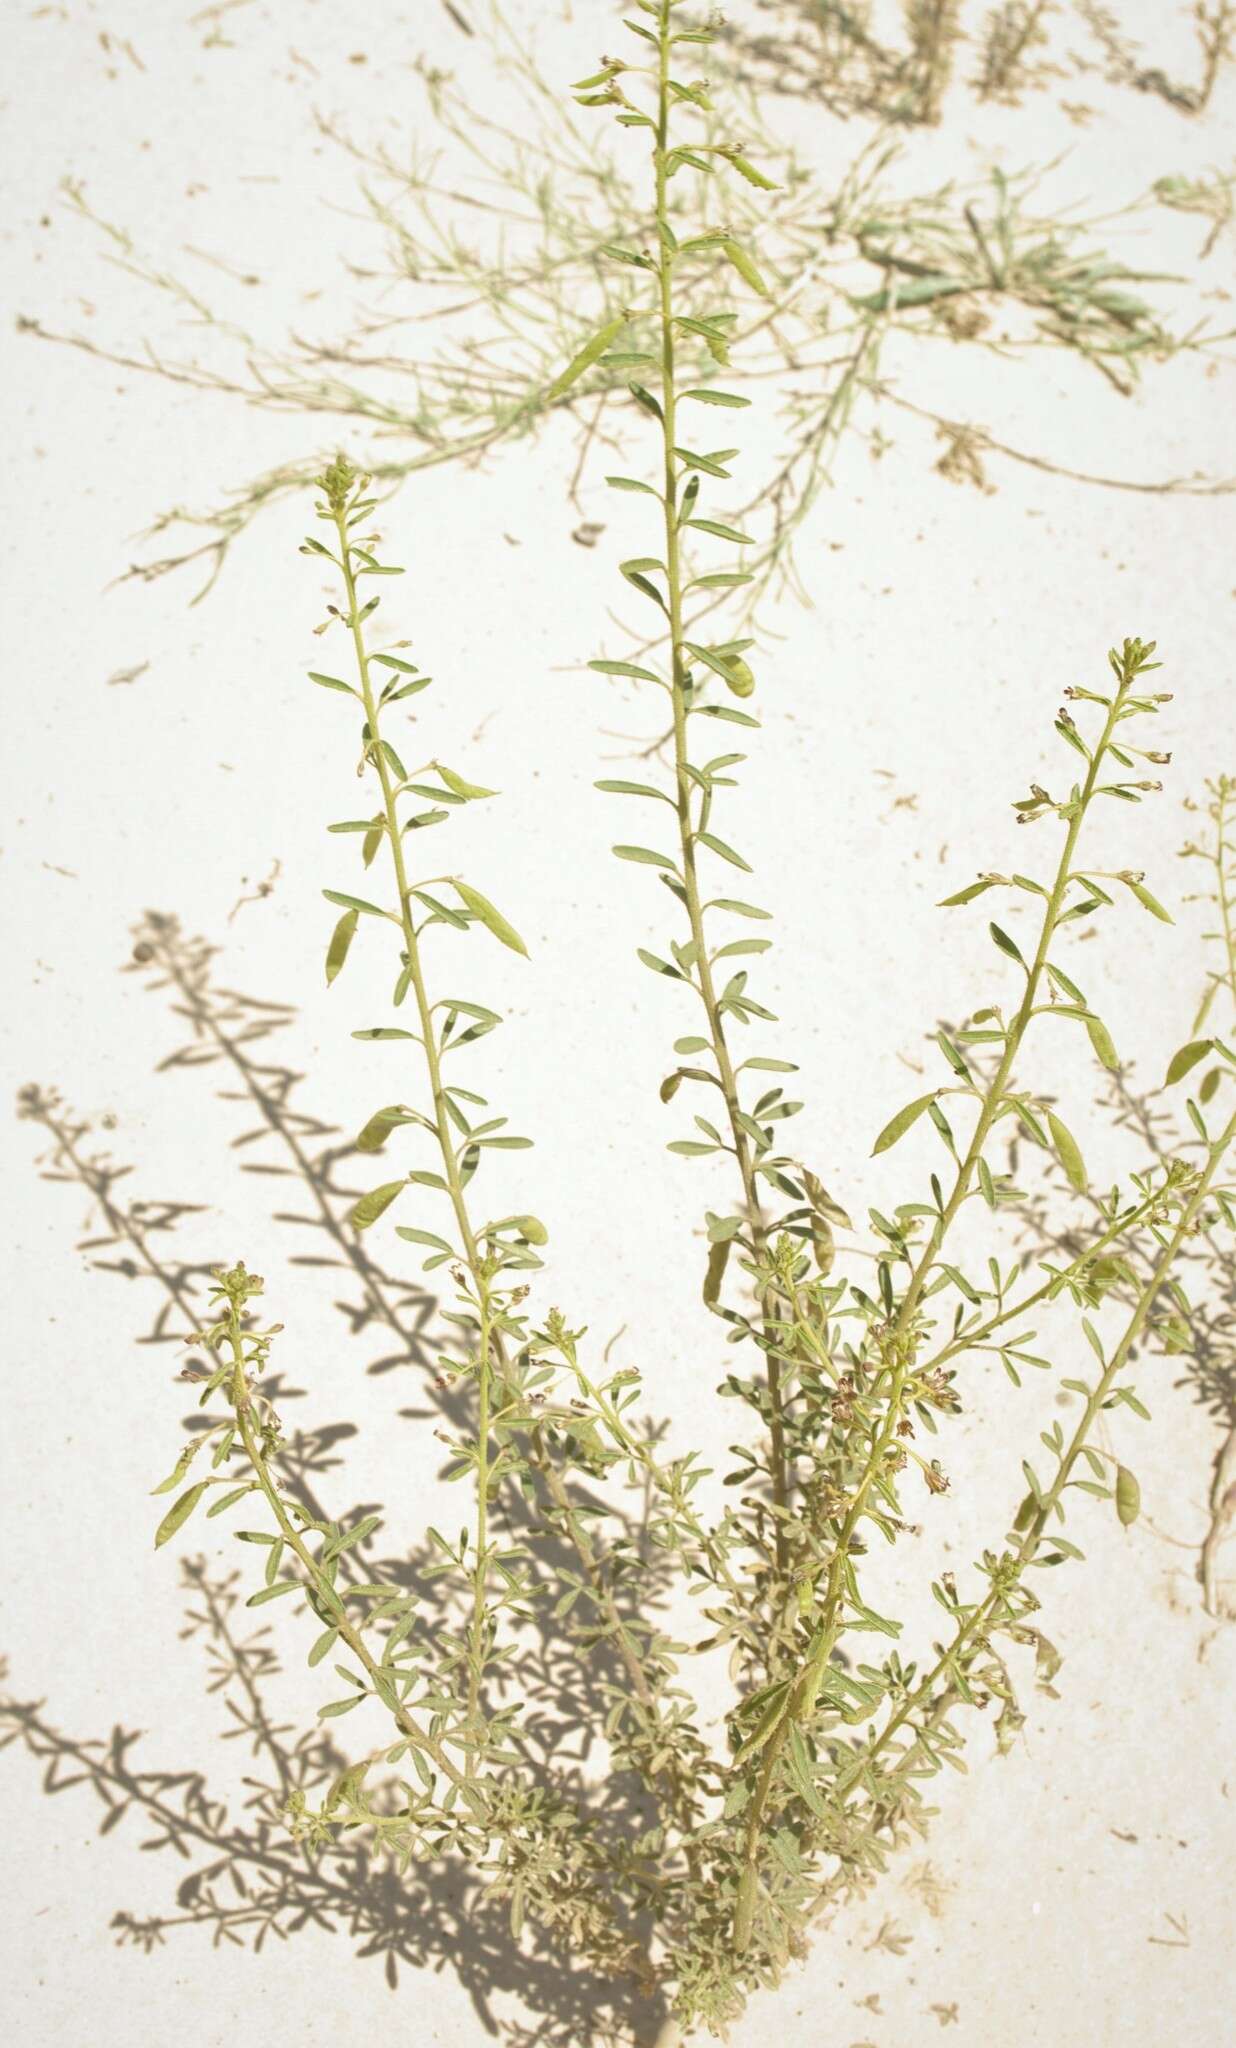 Image of Cleome arabica L.